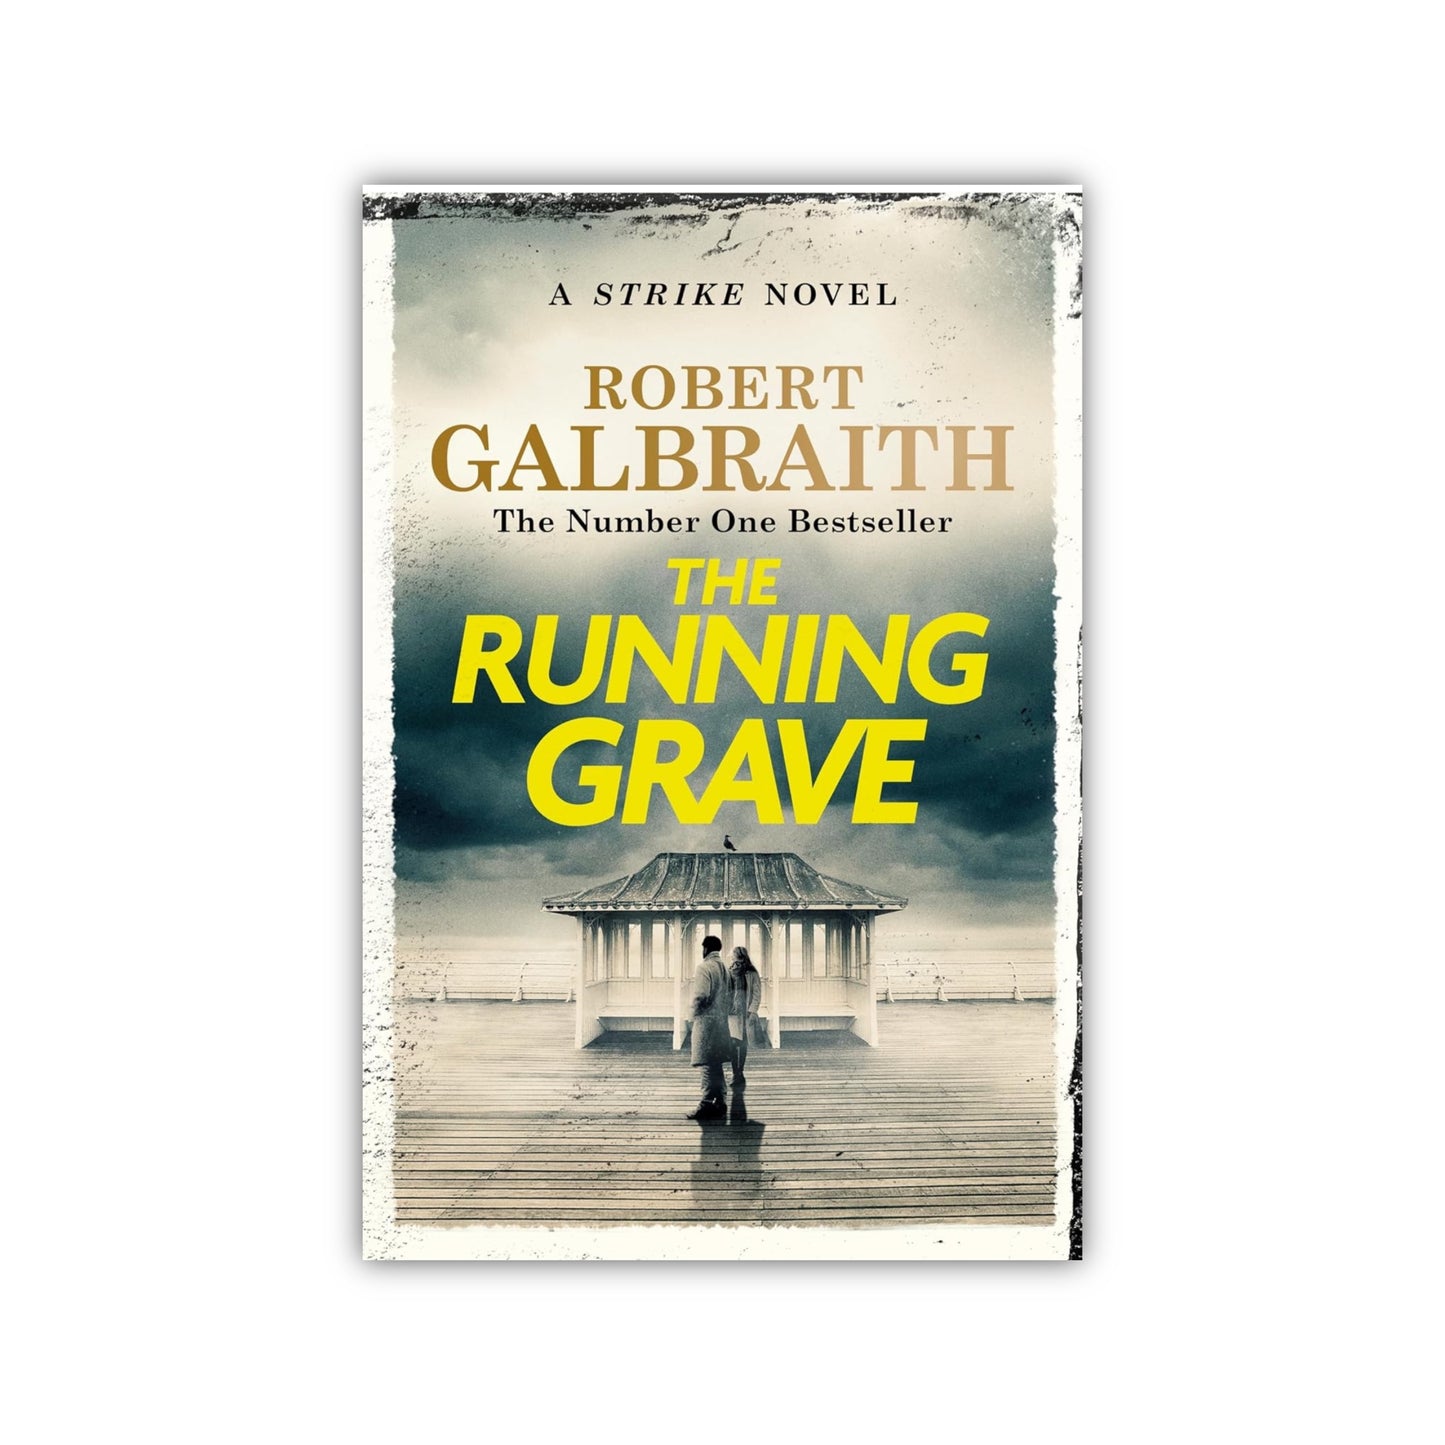 The Running Grave (Cormoran Strike #7) by Robert Galbraith